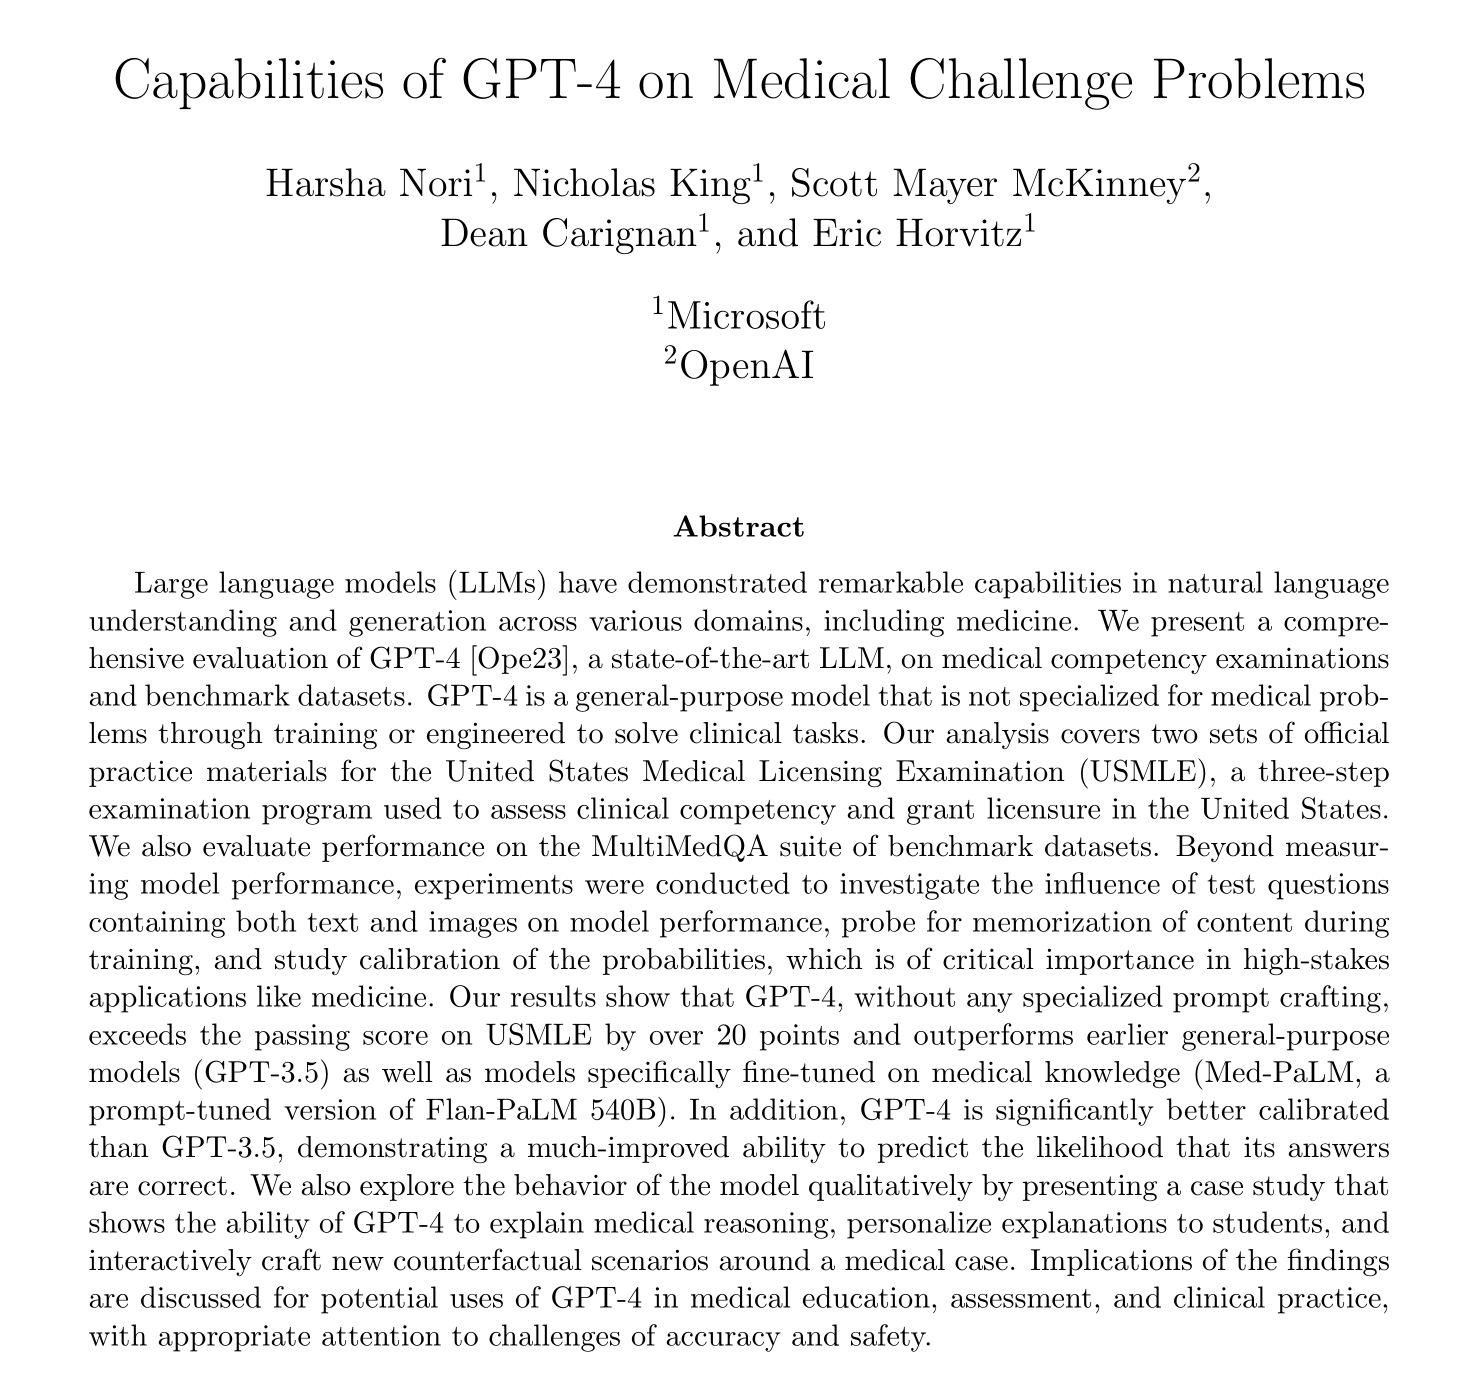 Nori H, King N, McKinney SM, Carignan D, Horvitz E. Capabilities of GPT-4 on Medical Challenge Problems 2023.